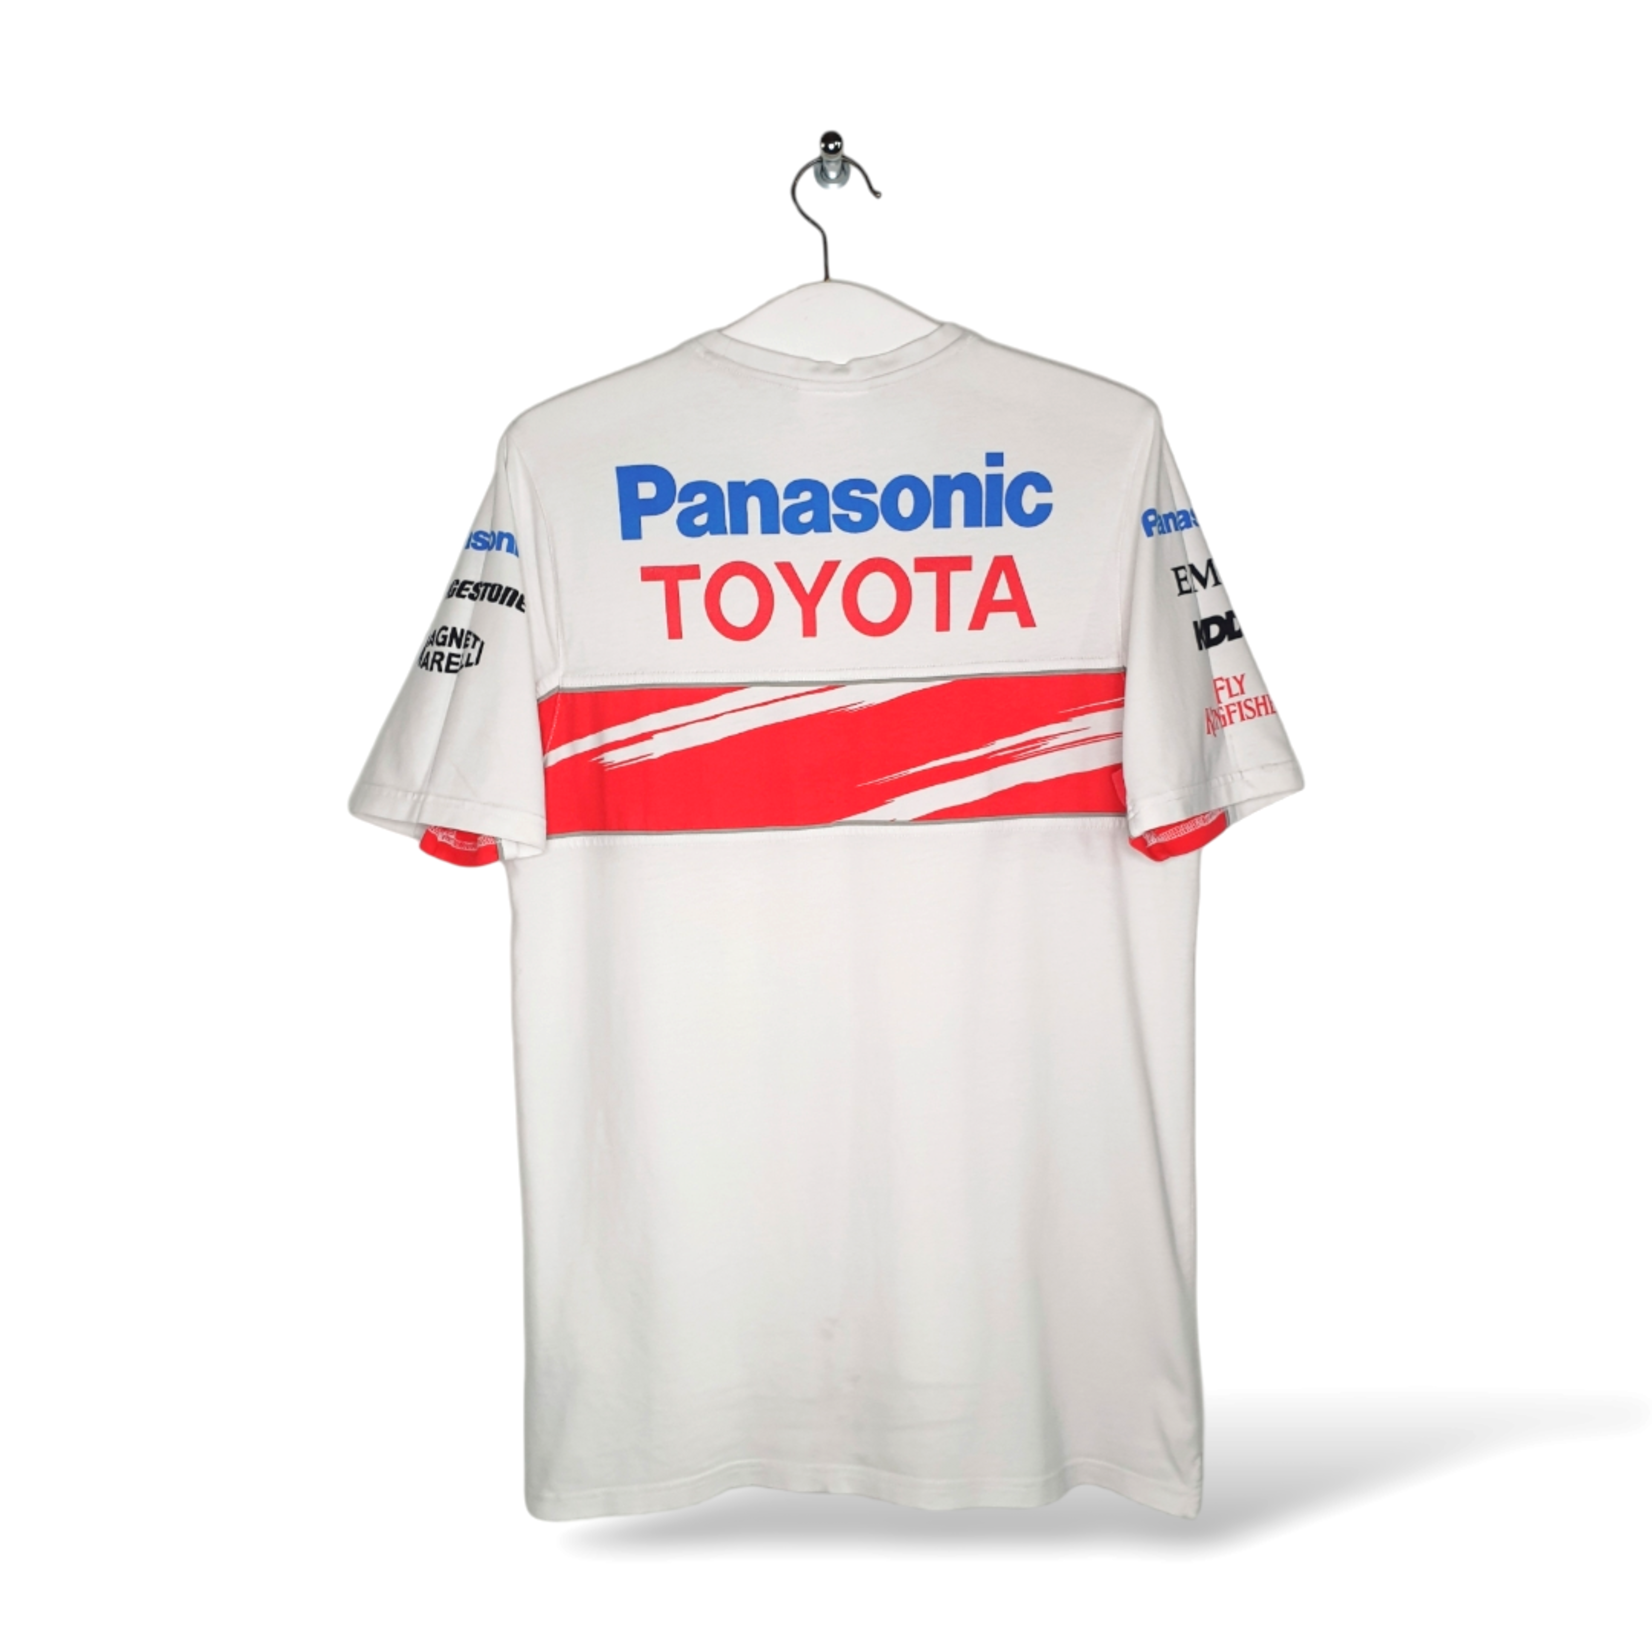 Vintage F1 t-shirt Panasonic Toyota Racing 2008/09 - We Love Sports Shirts